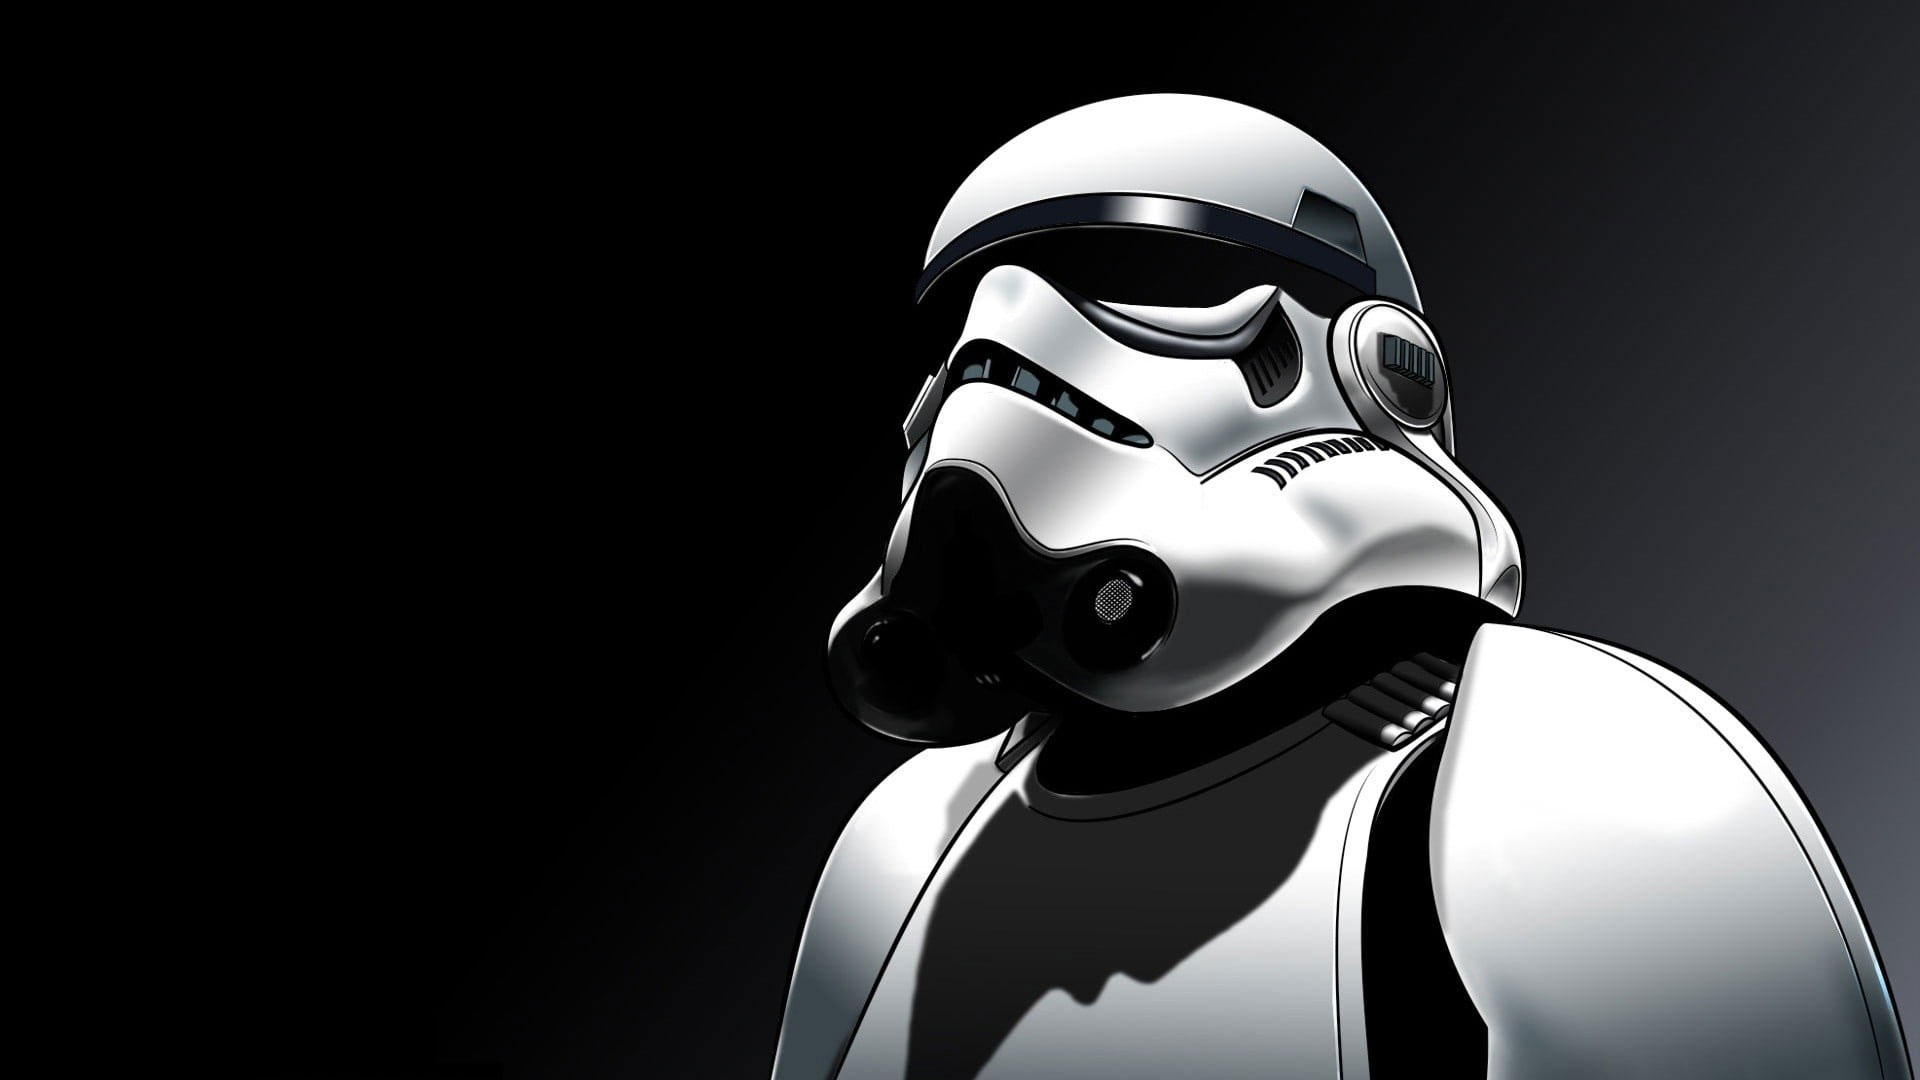 Wallpaper Star Wars Storm trooper Illustration